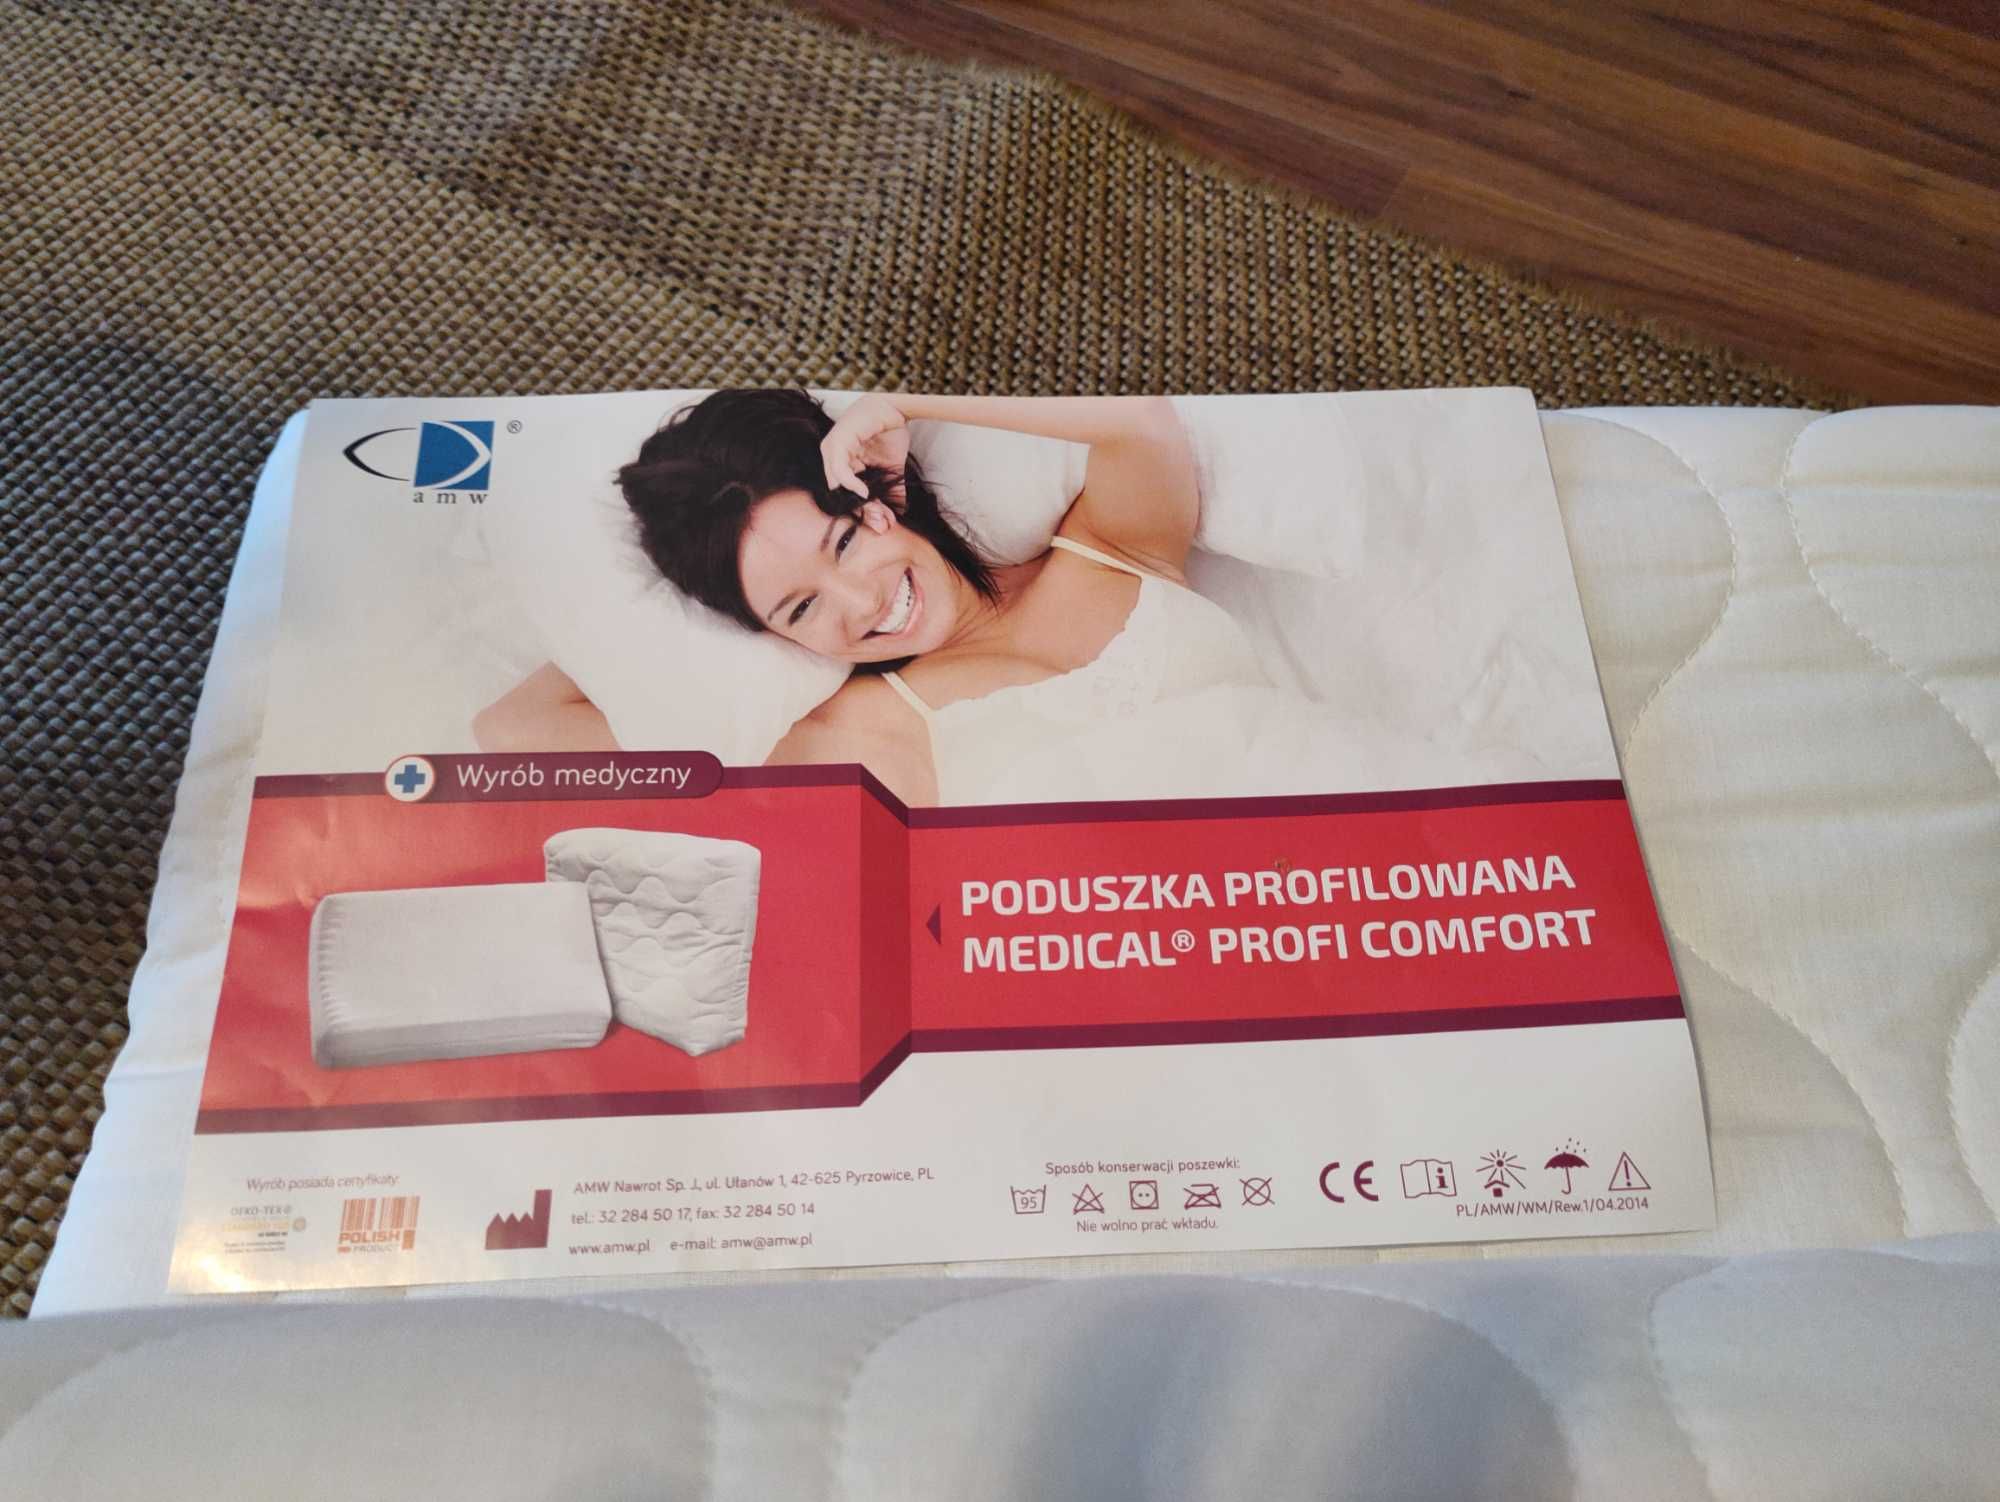 Poduszka Profilowana Medical Profi Comfort